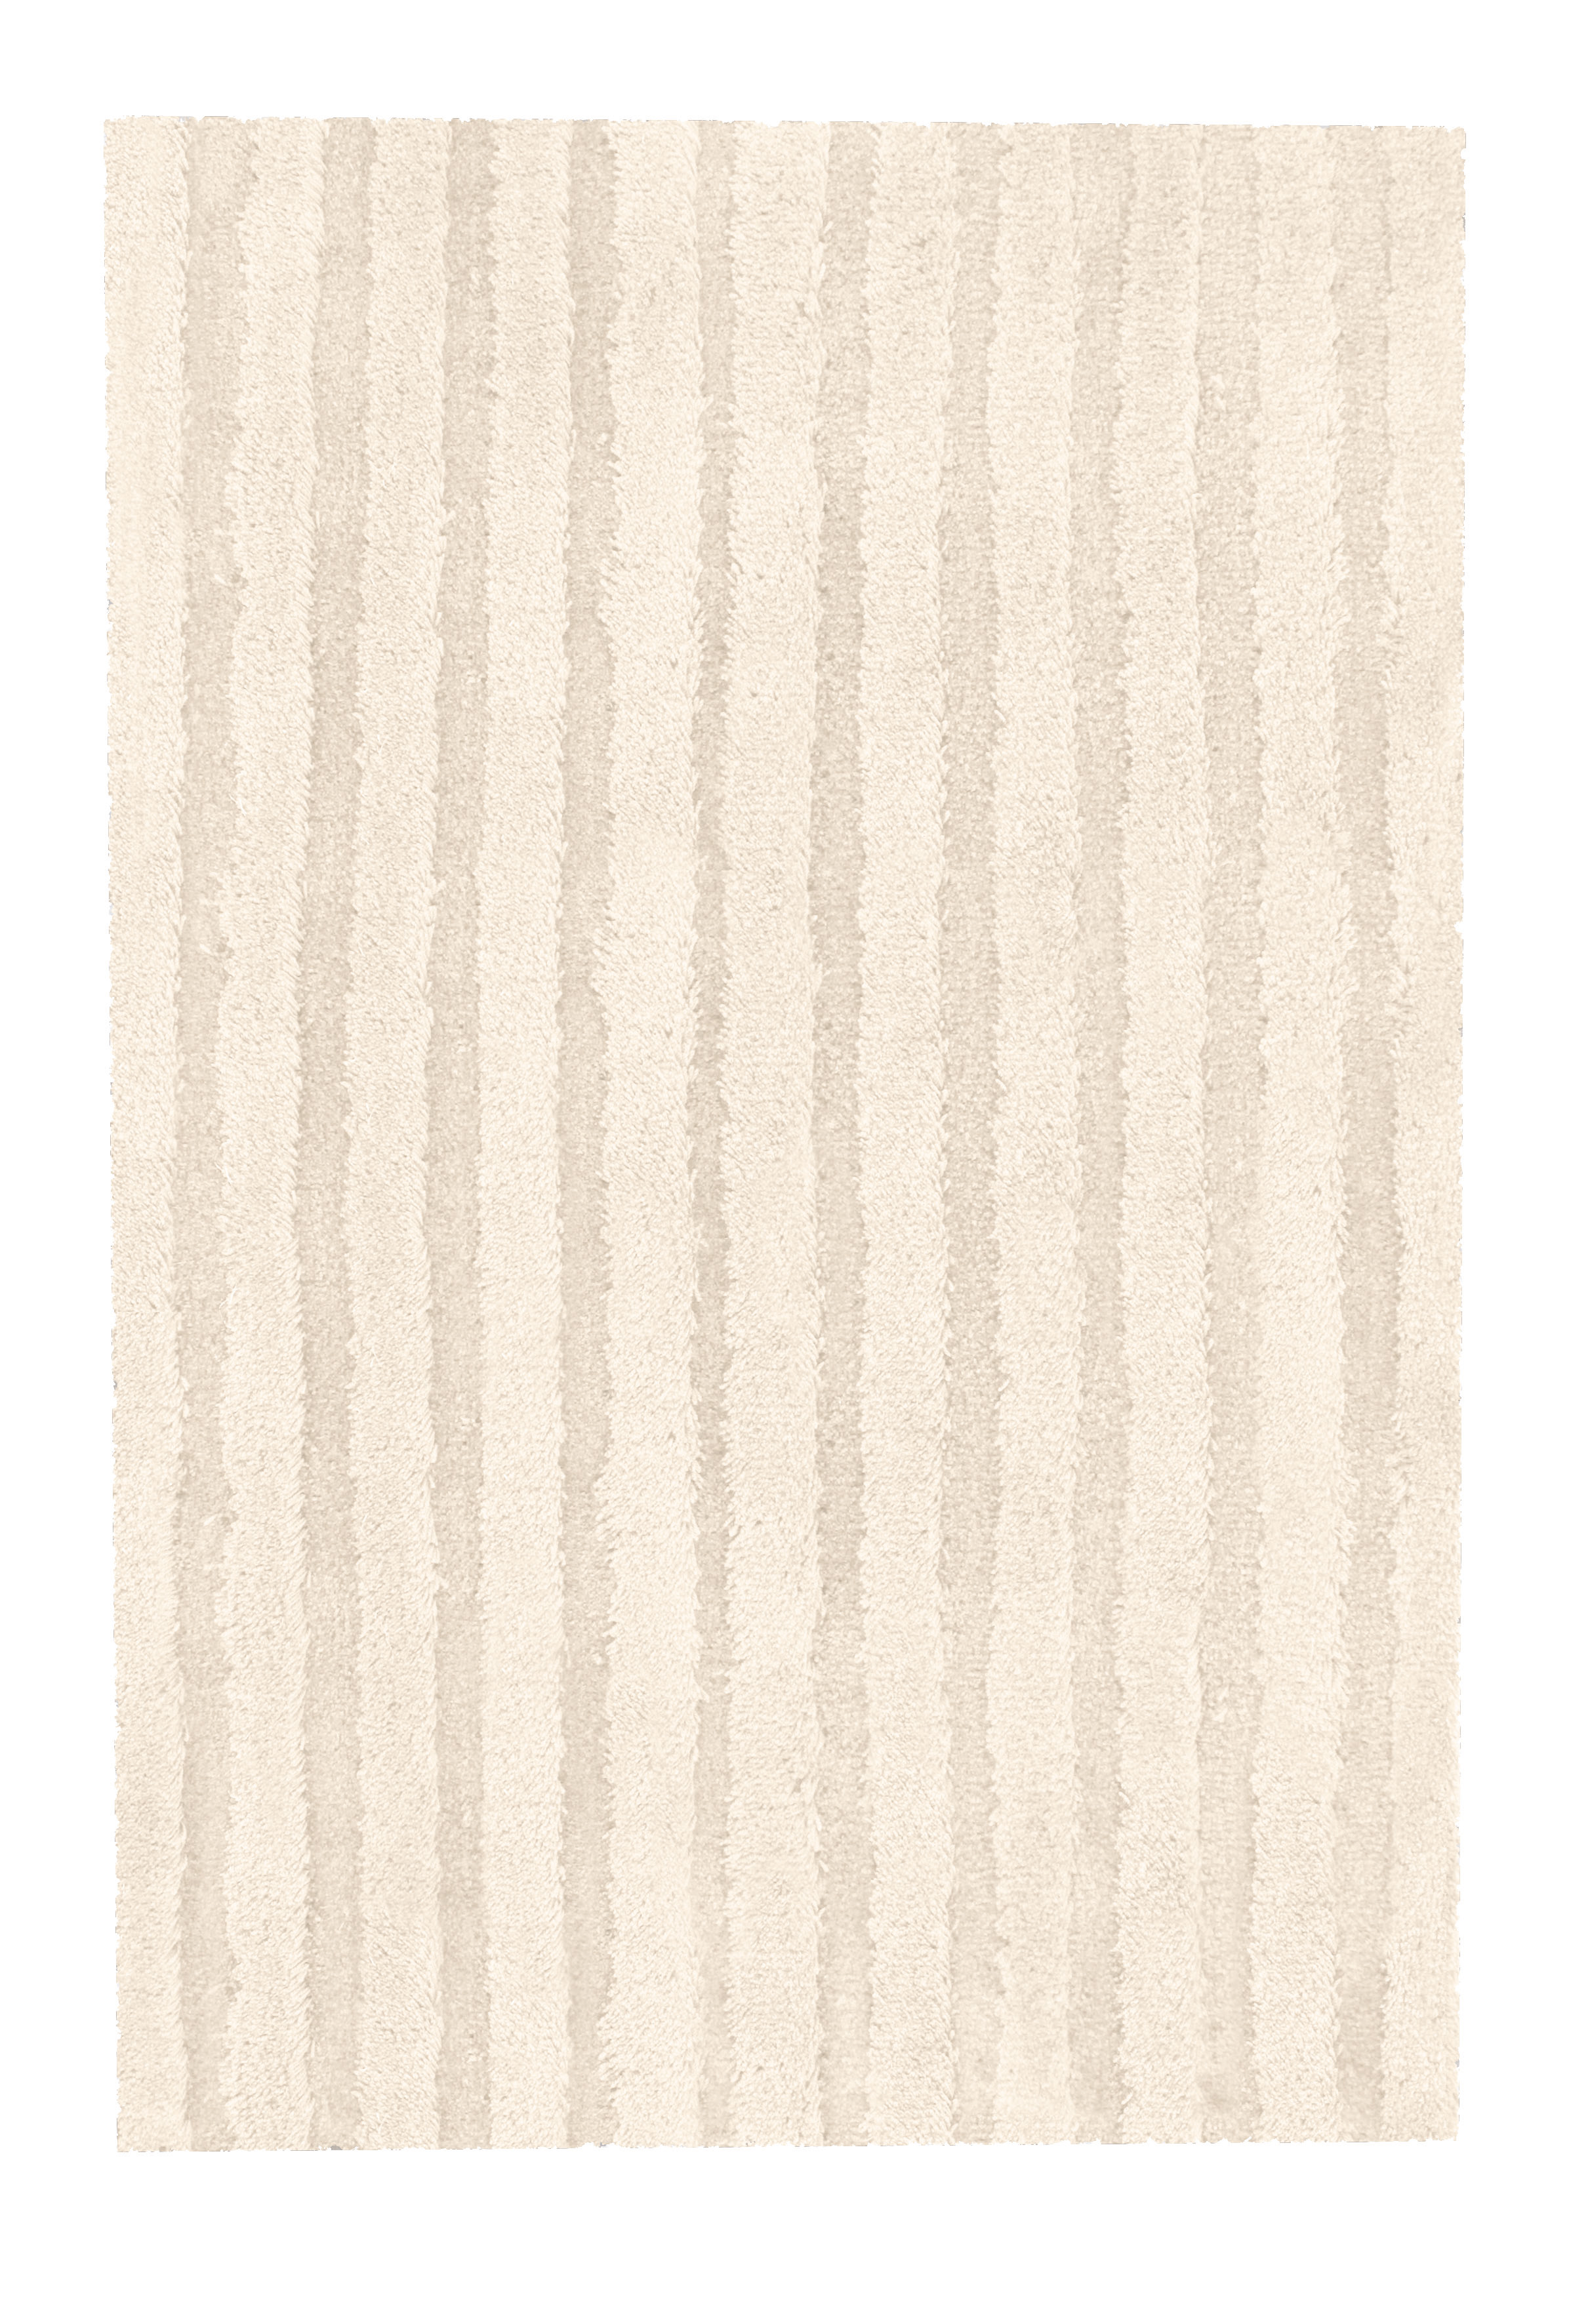 Badteppich Cord, Sandbeige, 60x60 cm